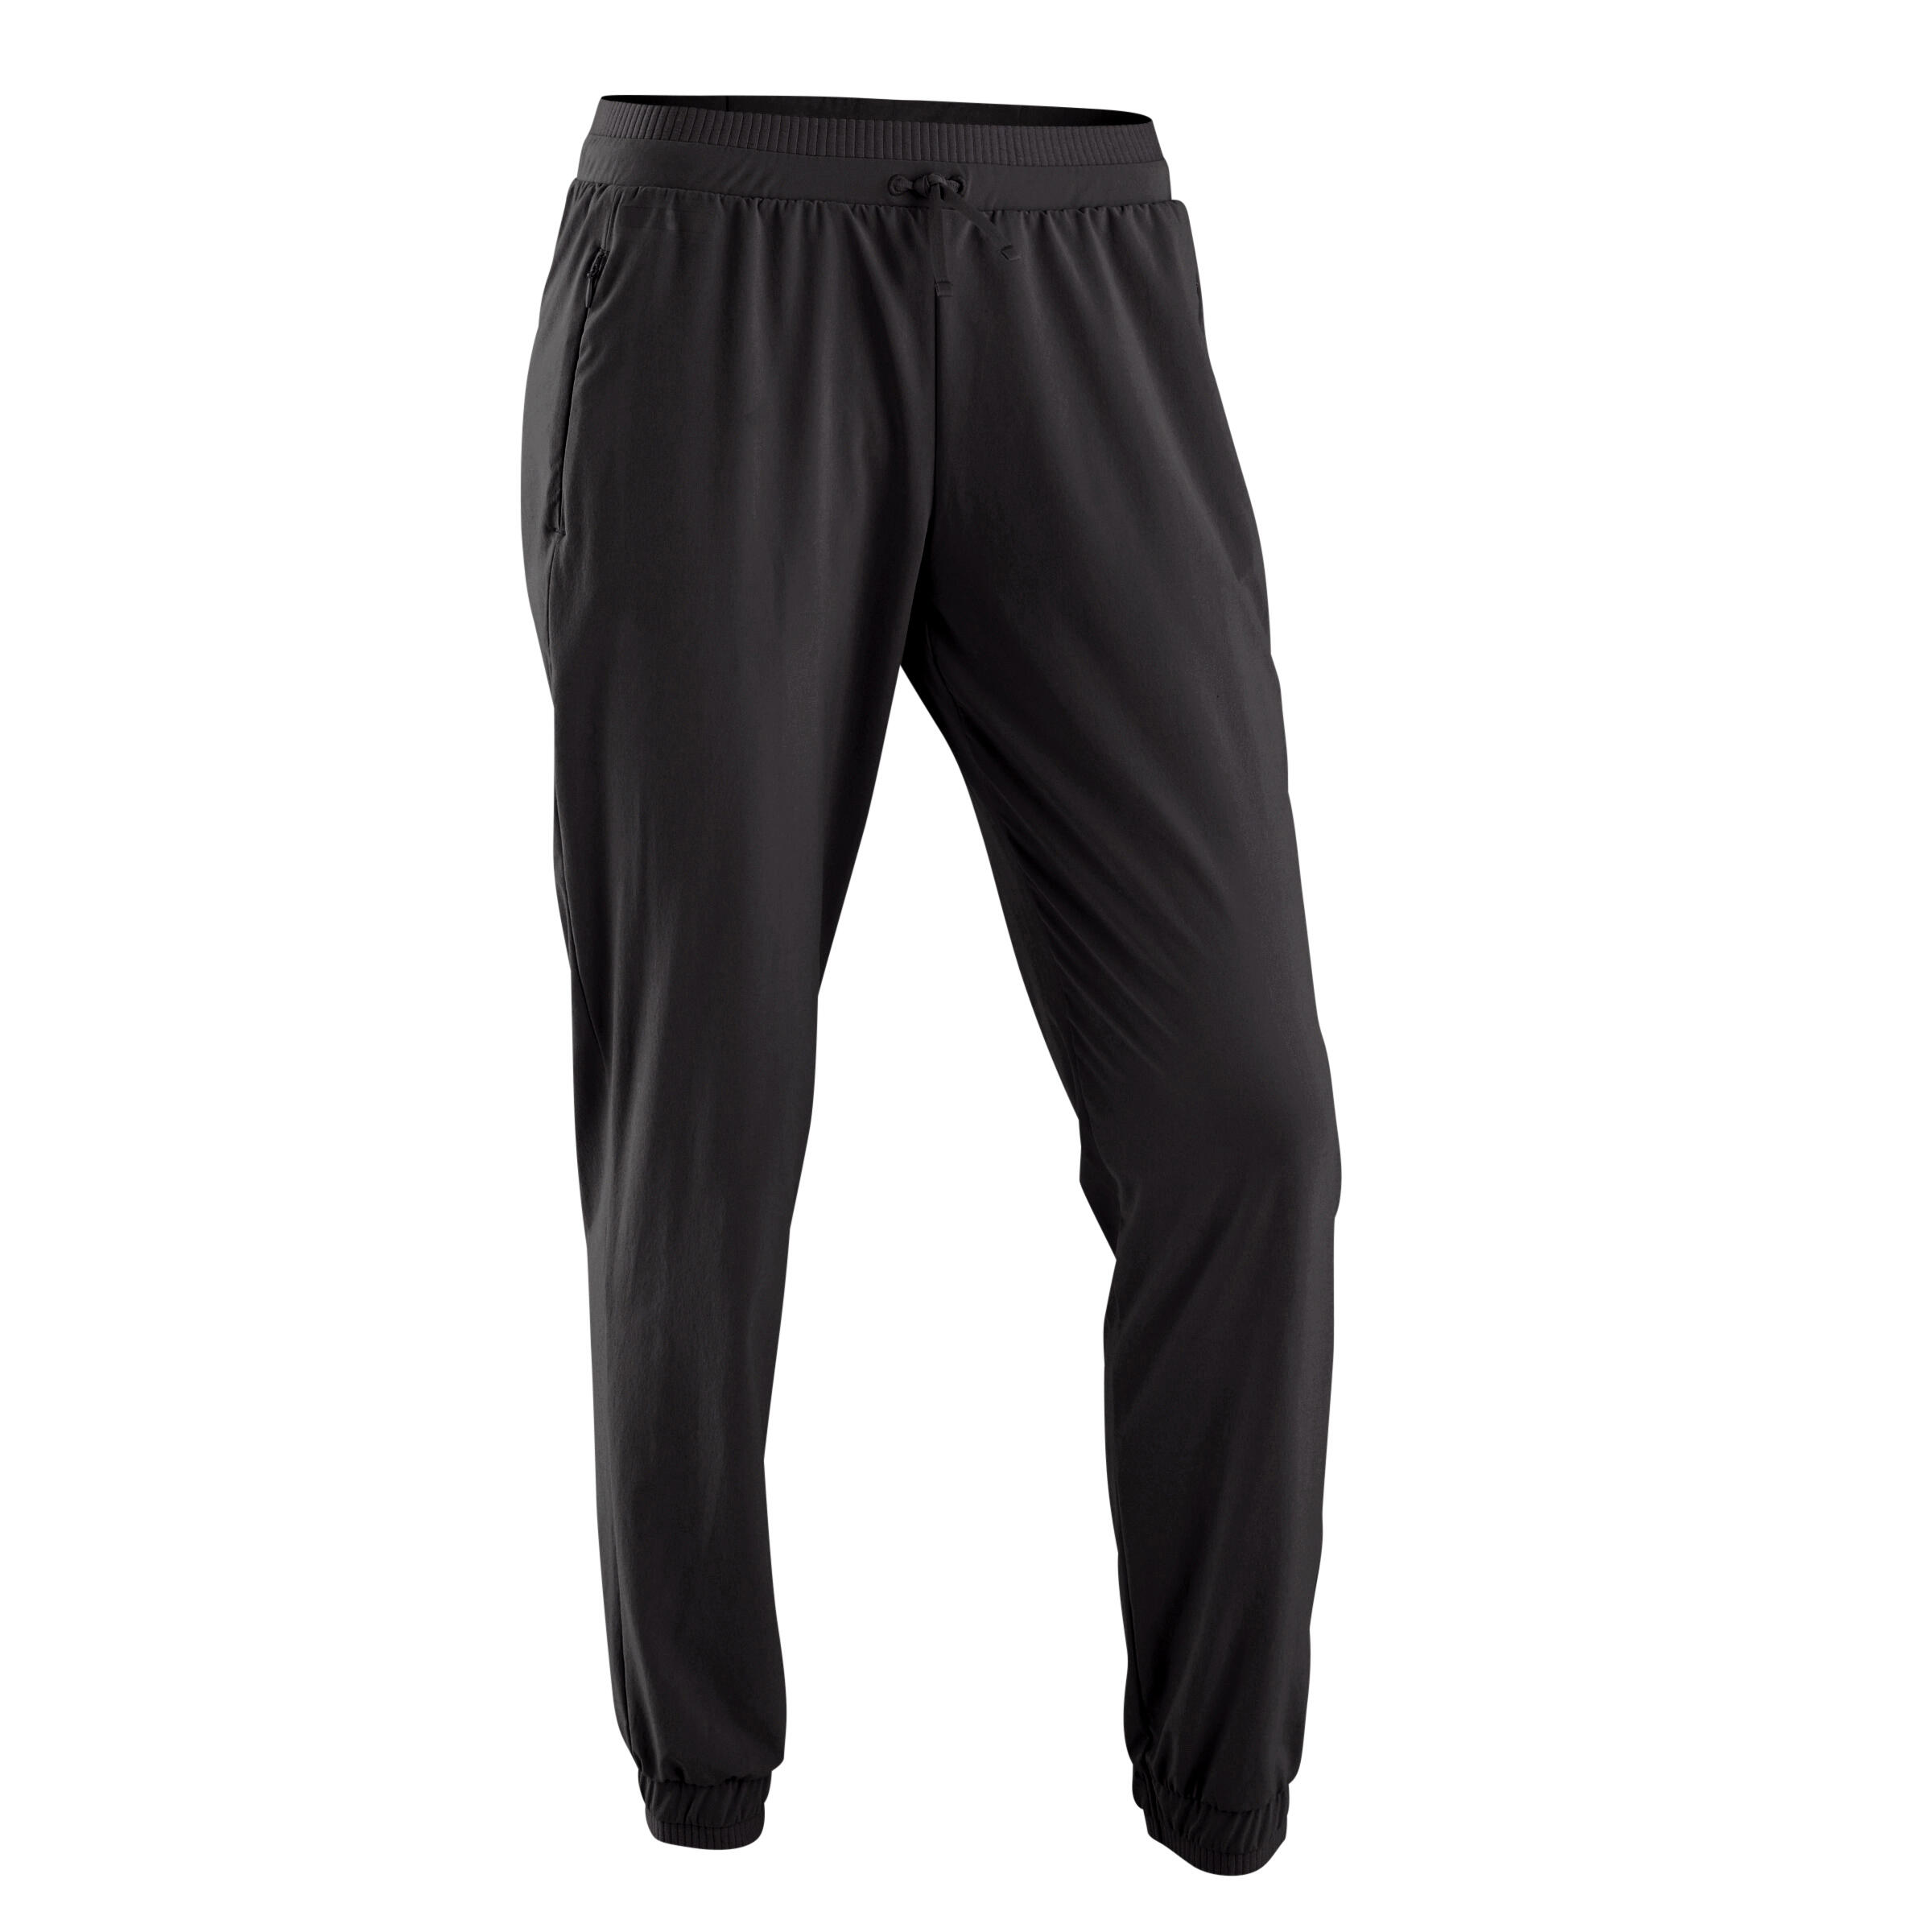 women s jogging running breathable trousers dry black kalenji 8553389